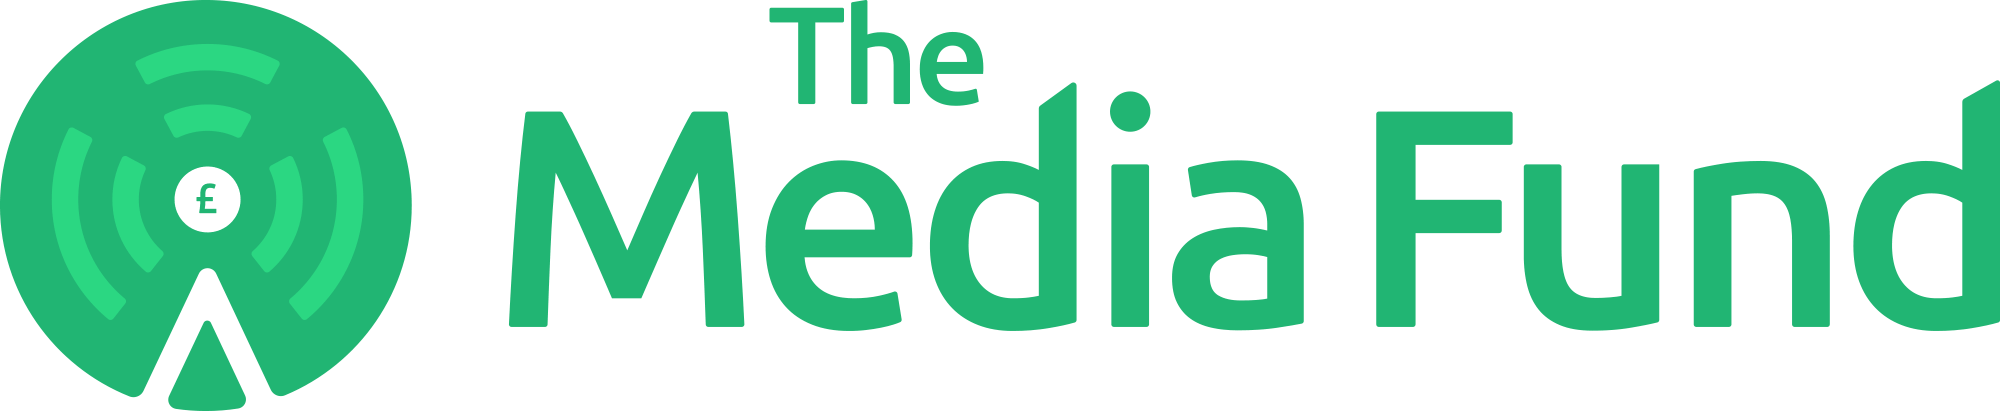 Fund Logo - Home - The Media Fund